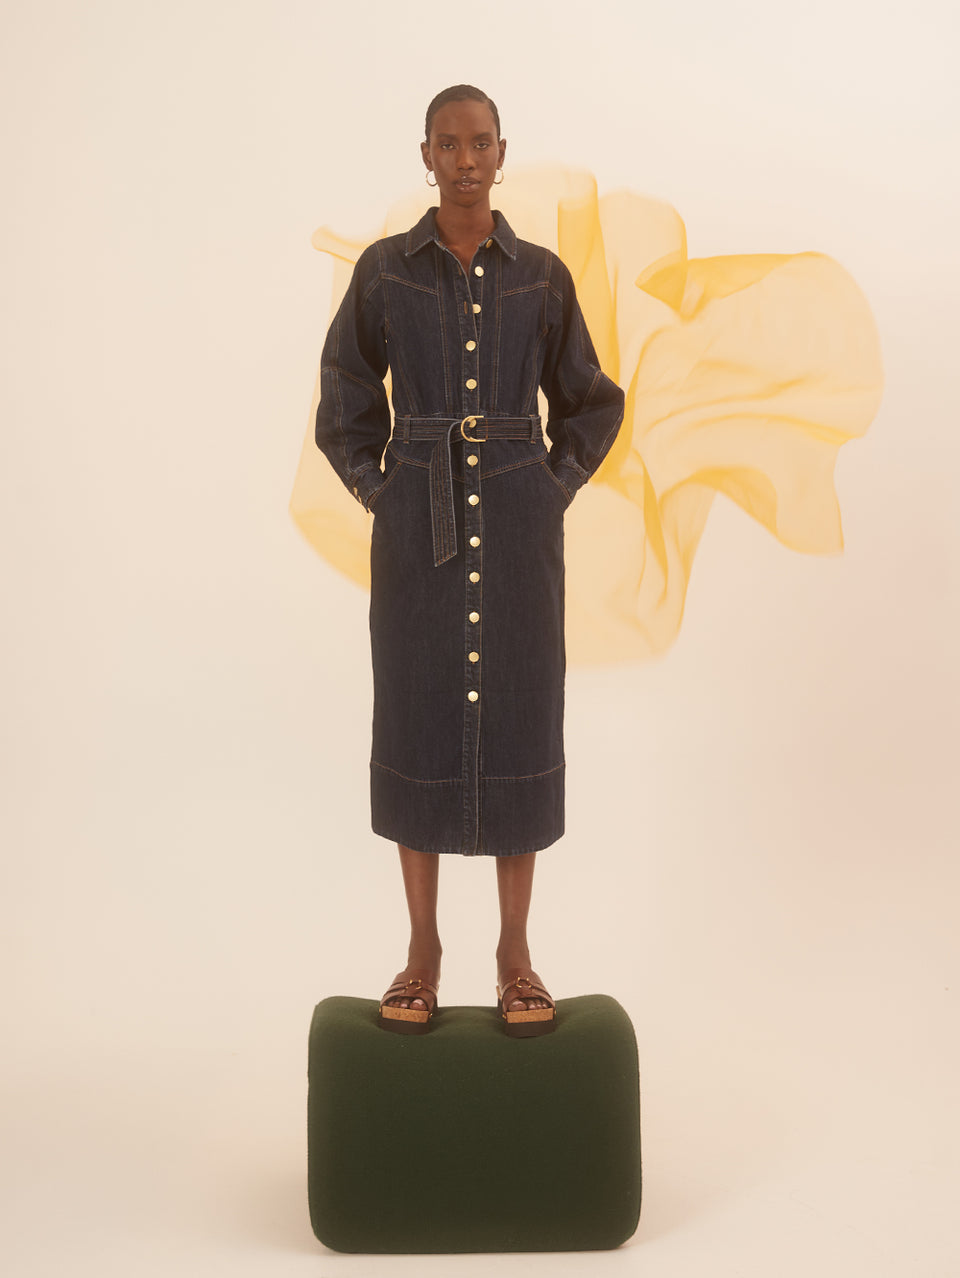 Bonny Midi Dress KIVARI | Model wears navy denim midi dress campaign